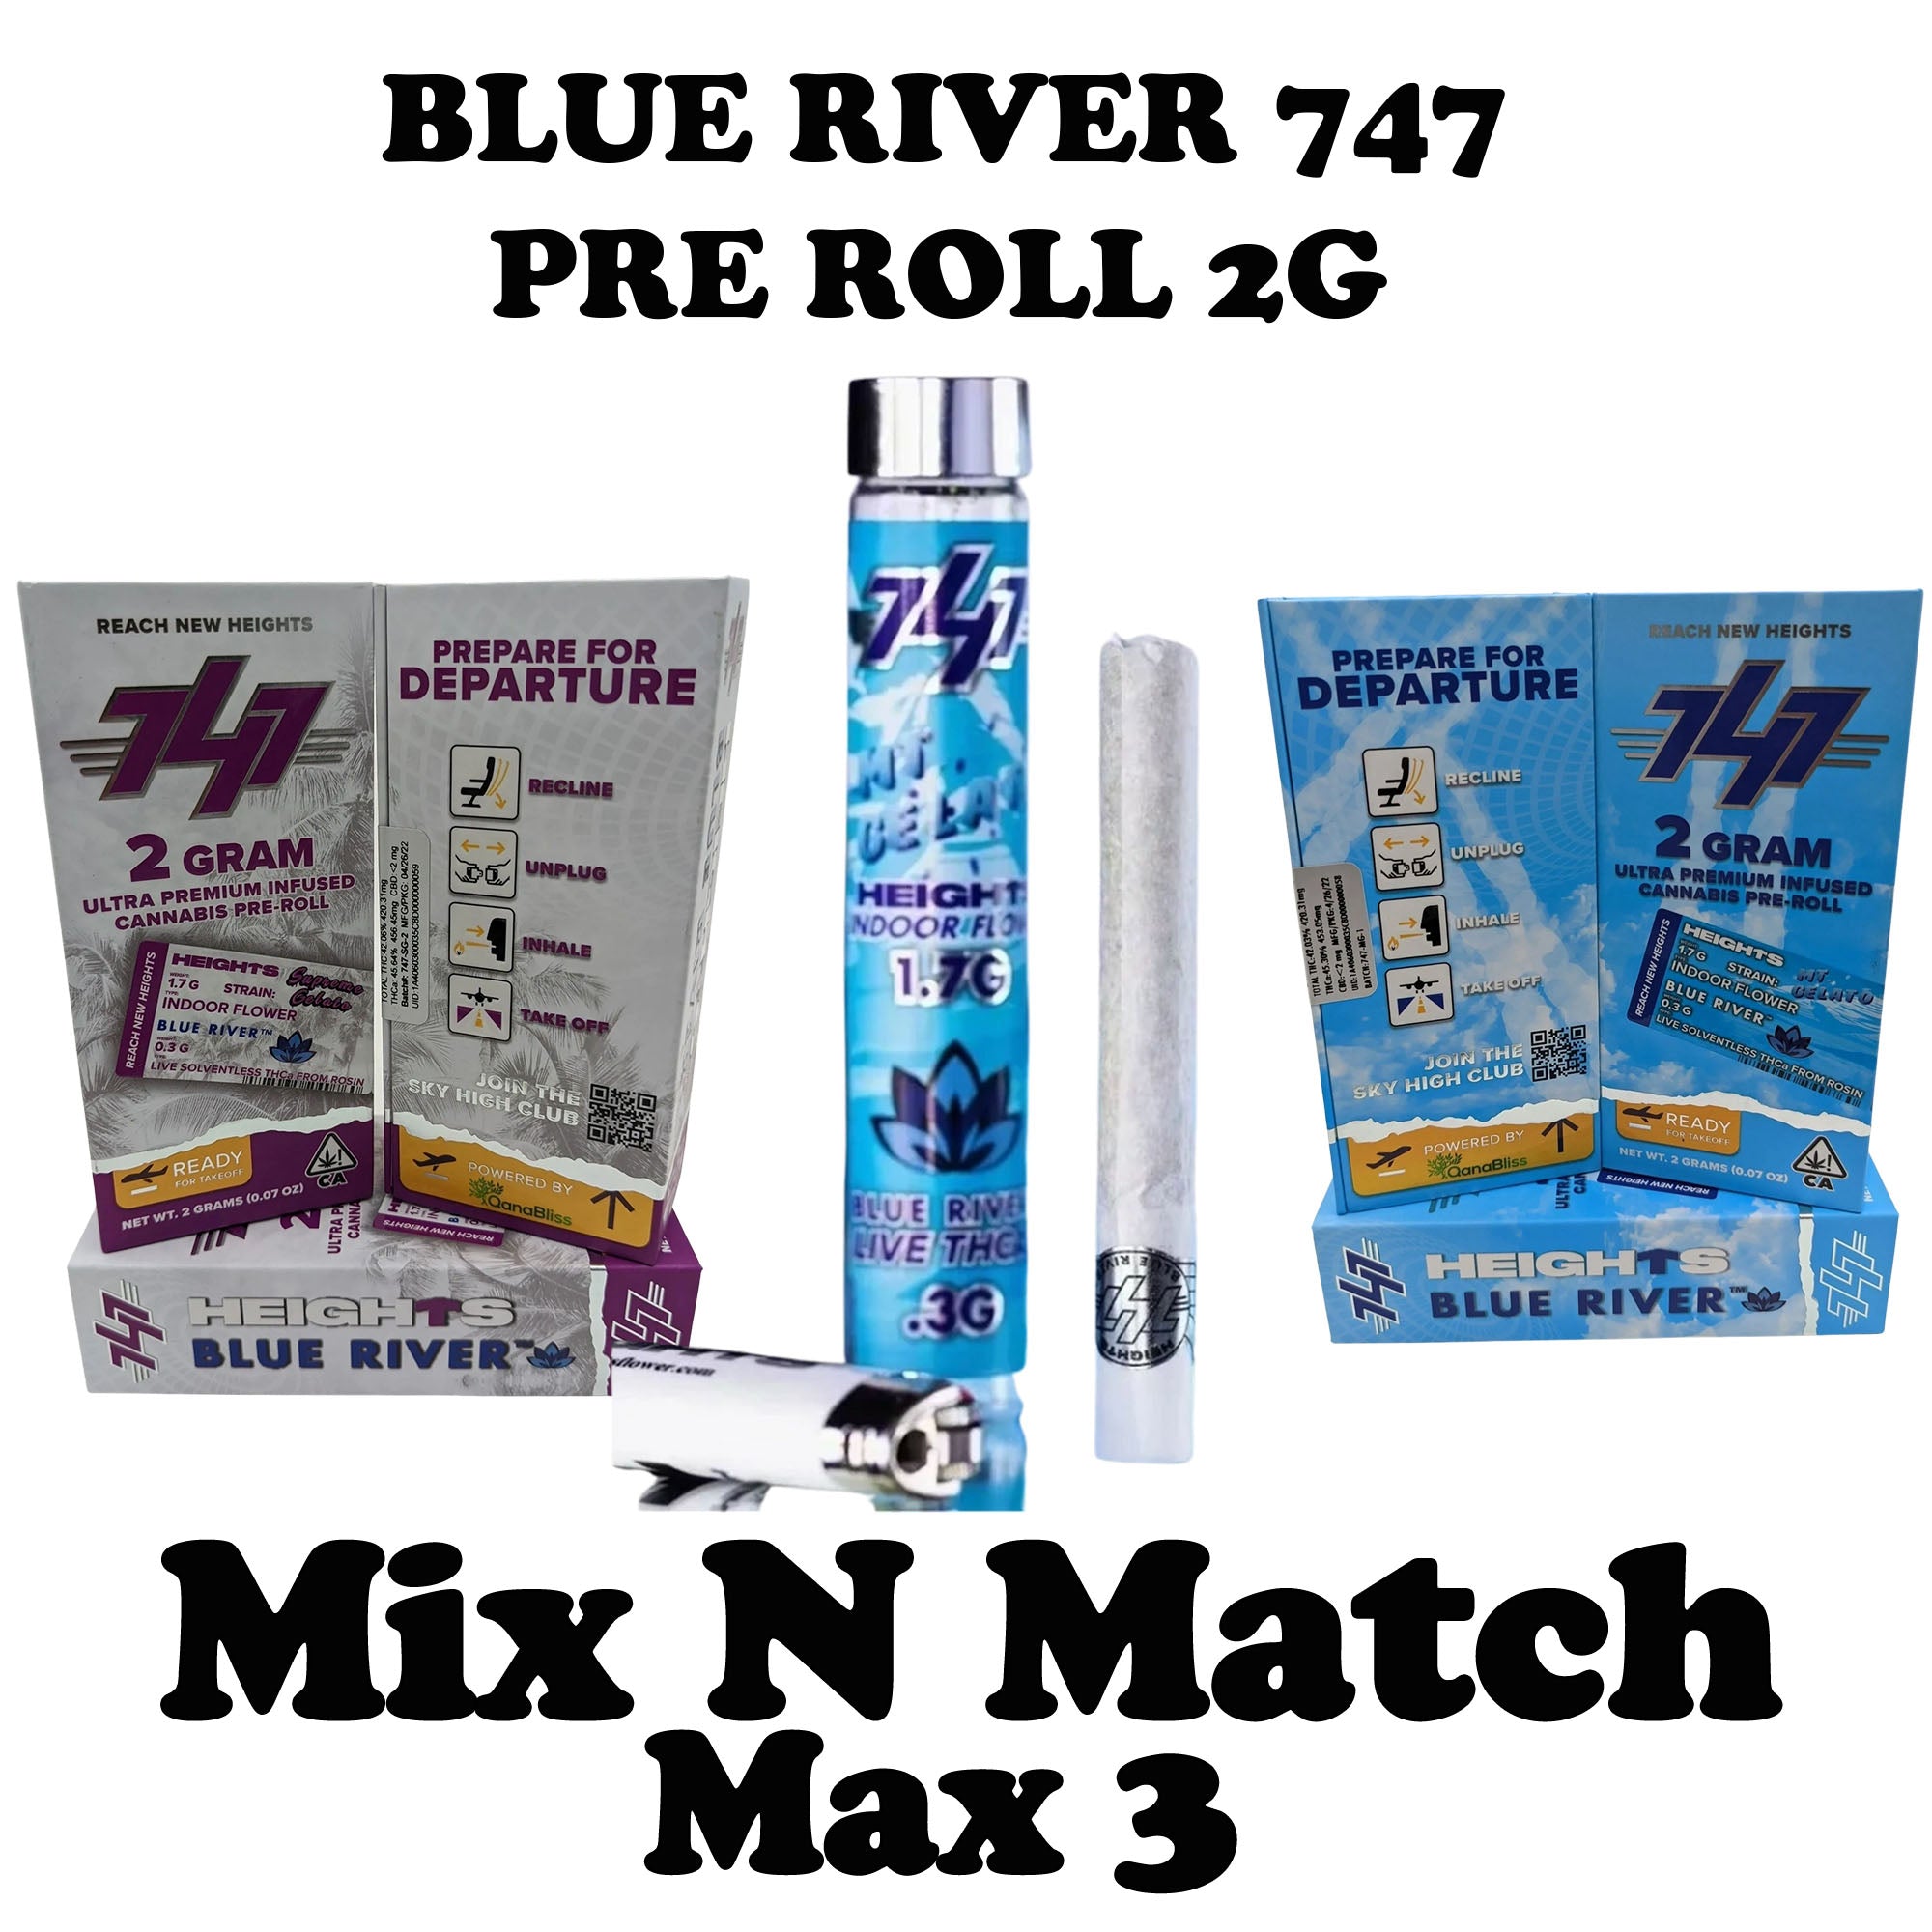 BLUE RIVER 747 PRE ROLL 2G Mix N Match